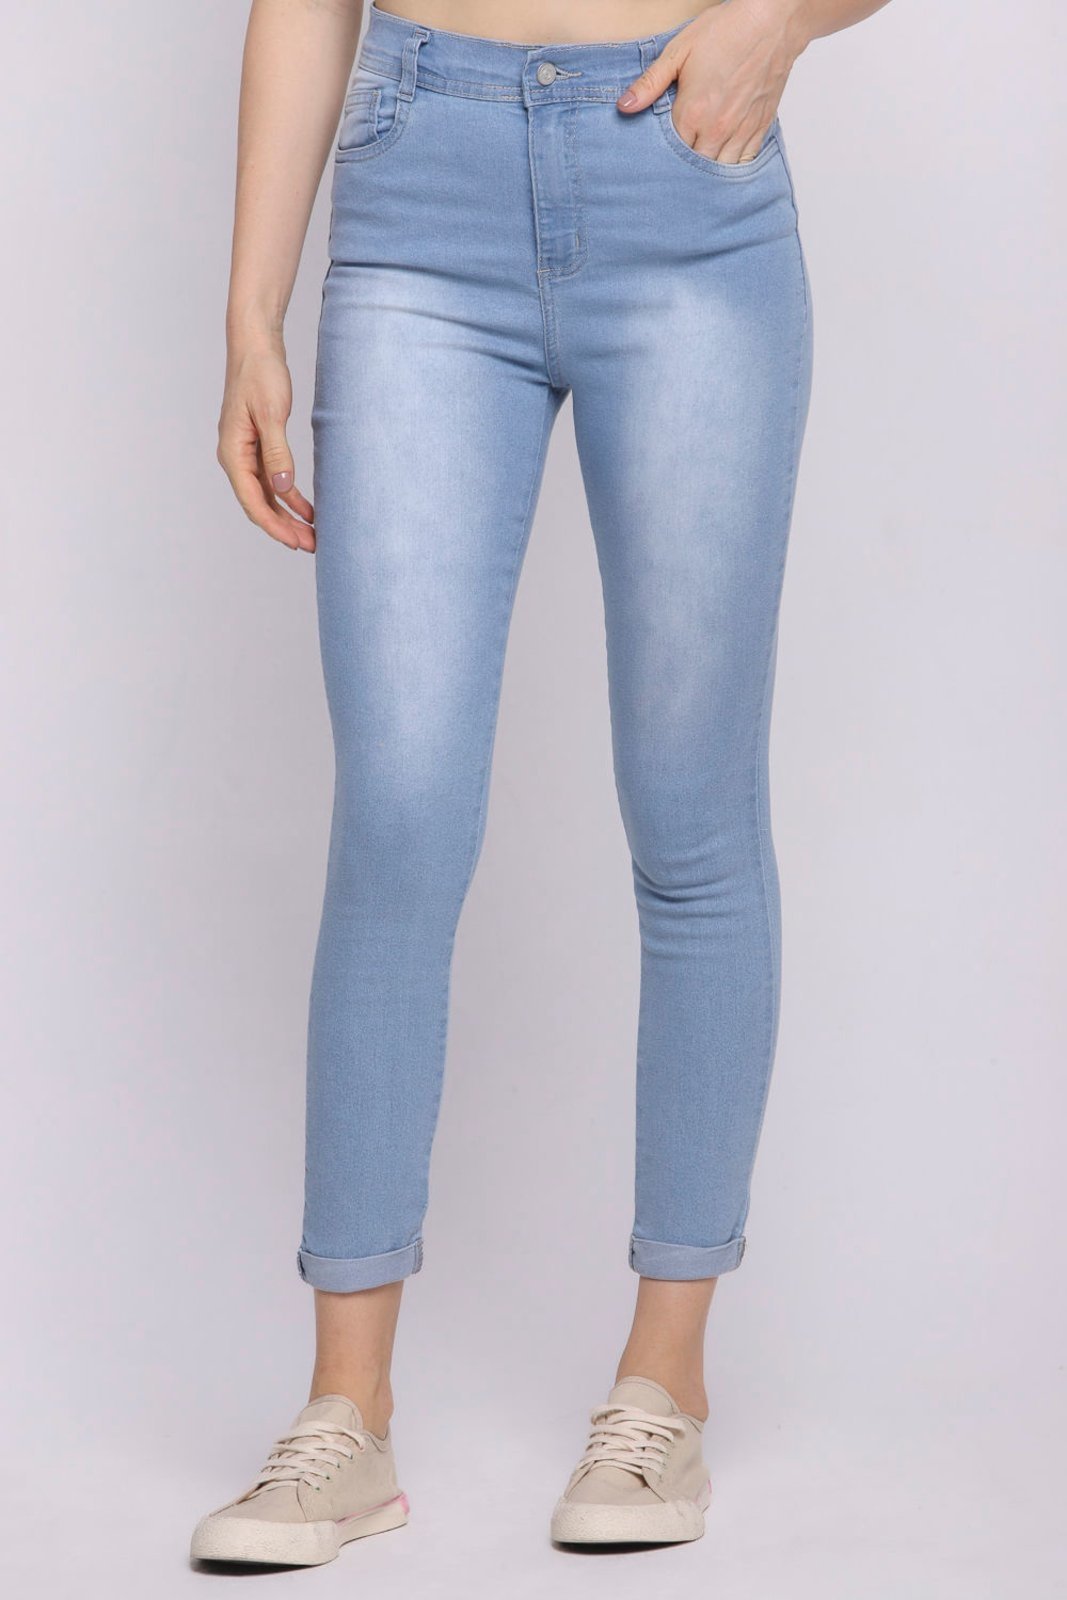 Calça Feminina Jeans Skinny Delavê